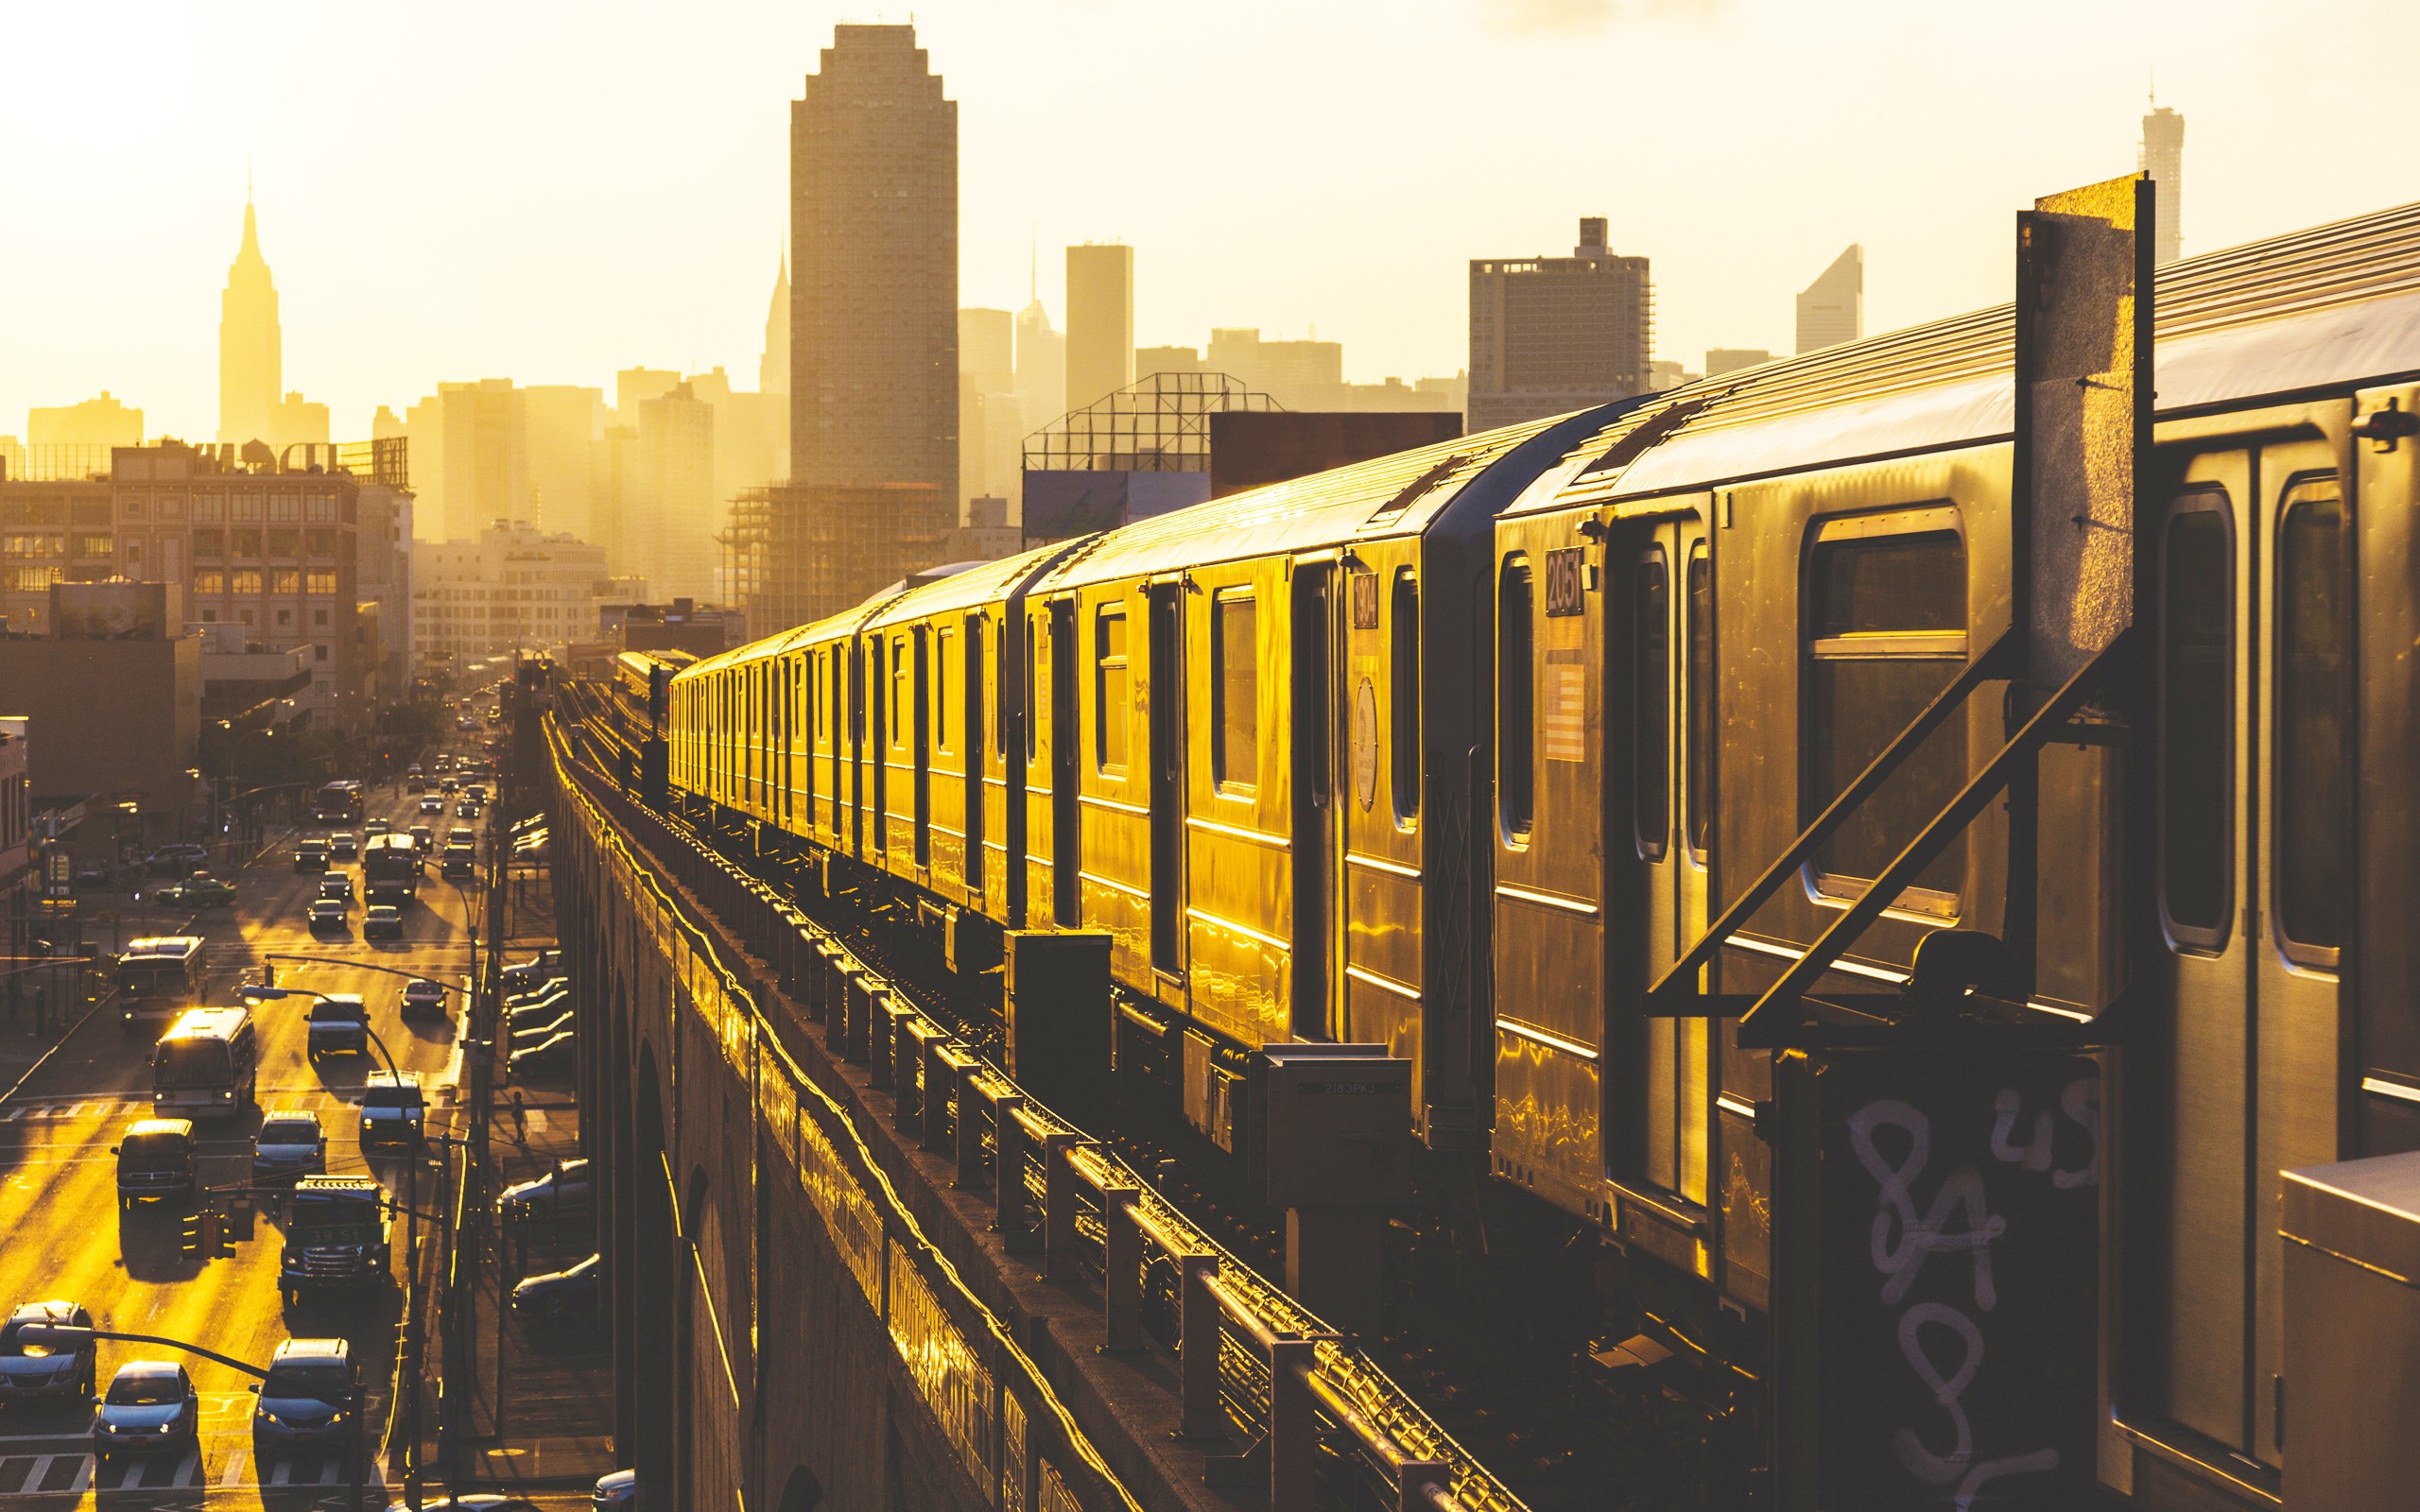 General 2560x1600 New York City train vehicle cityscape USA sunlight traffic street